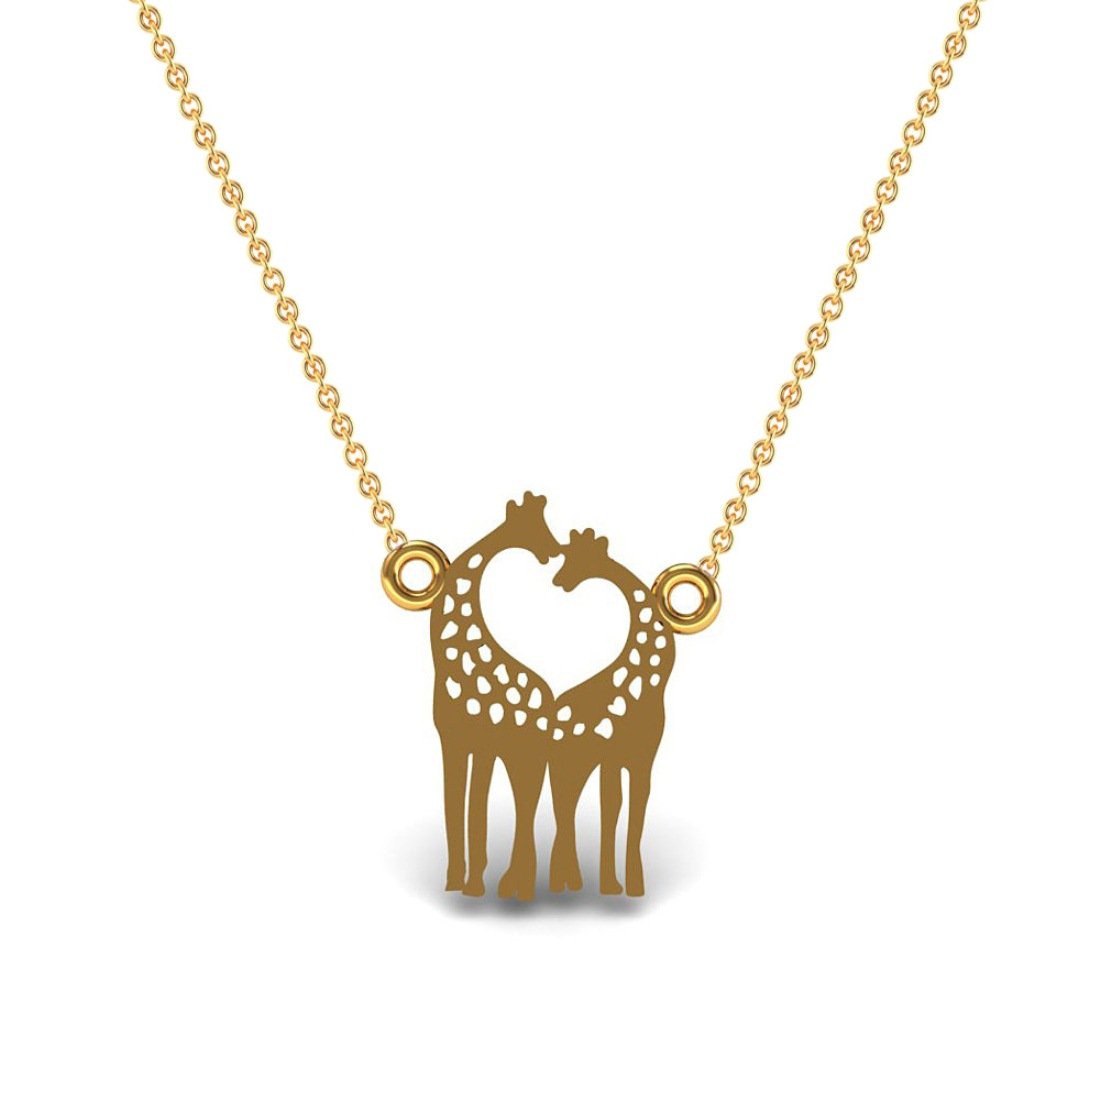 Giraffe shape gold pendant, 18k gold kids jewelry